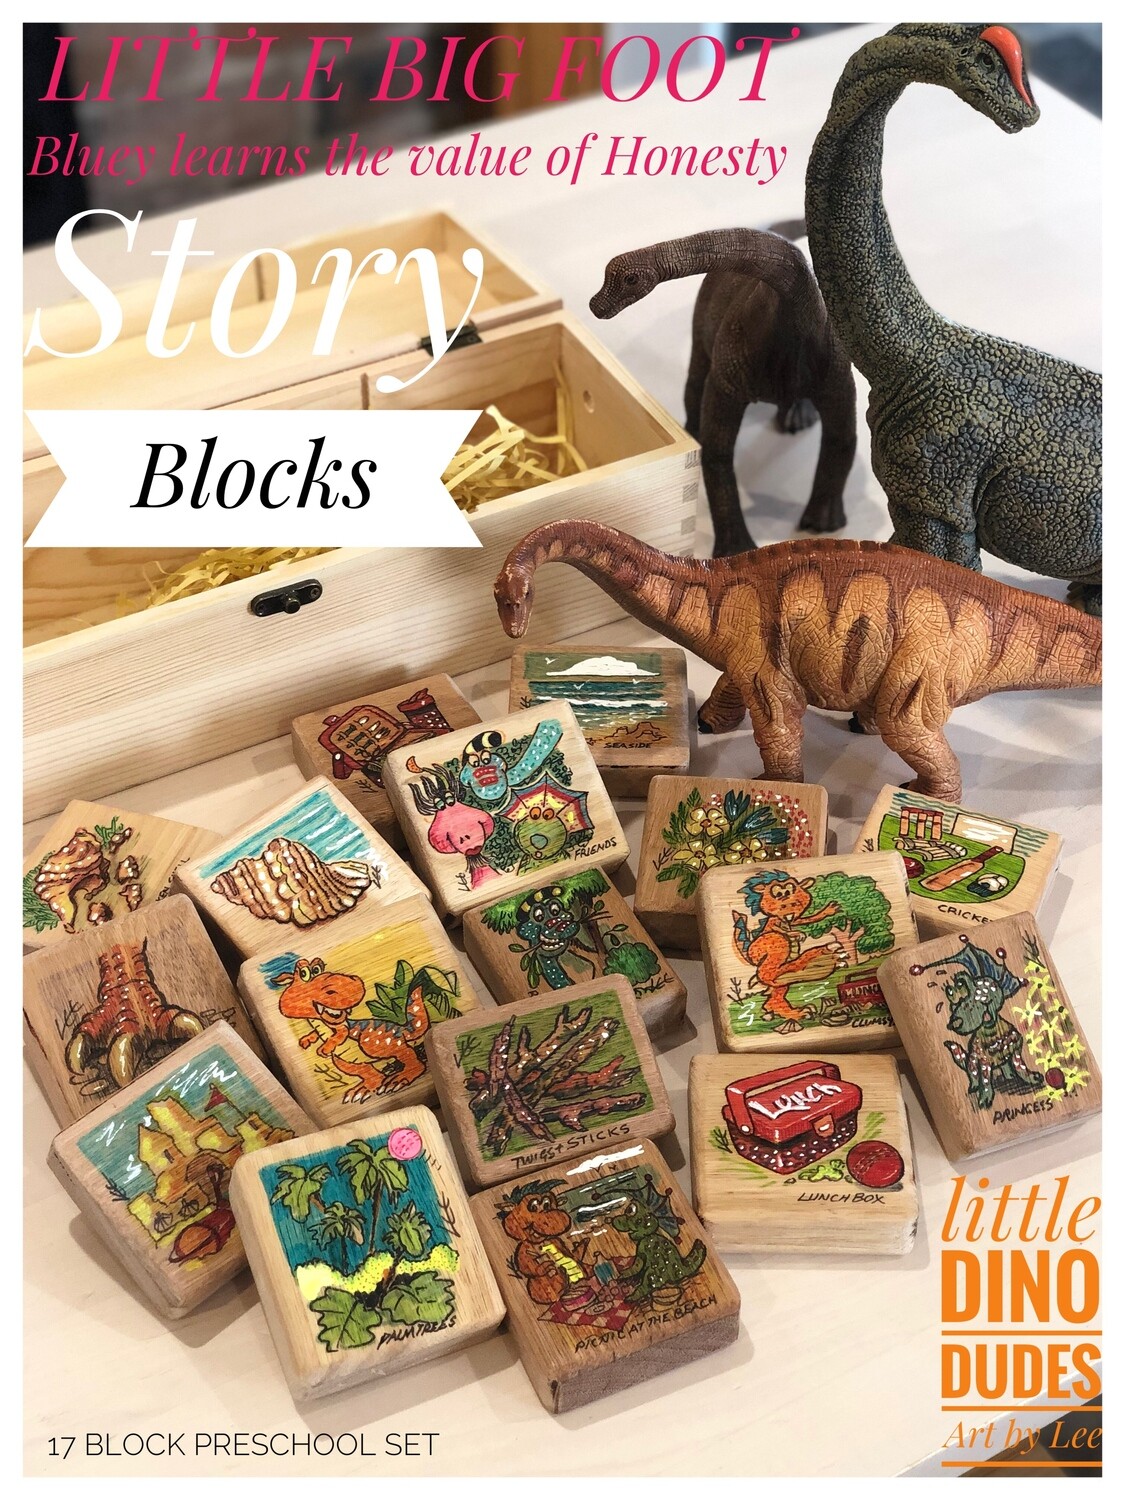 A. Wooden Story Blocks (17pcs Little Big Foot)